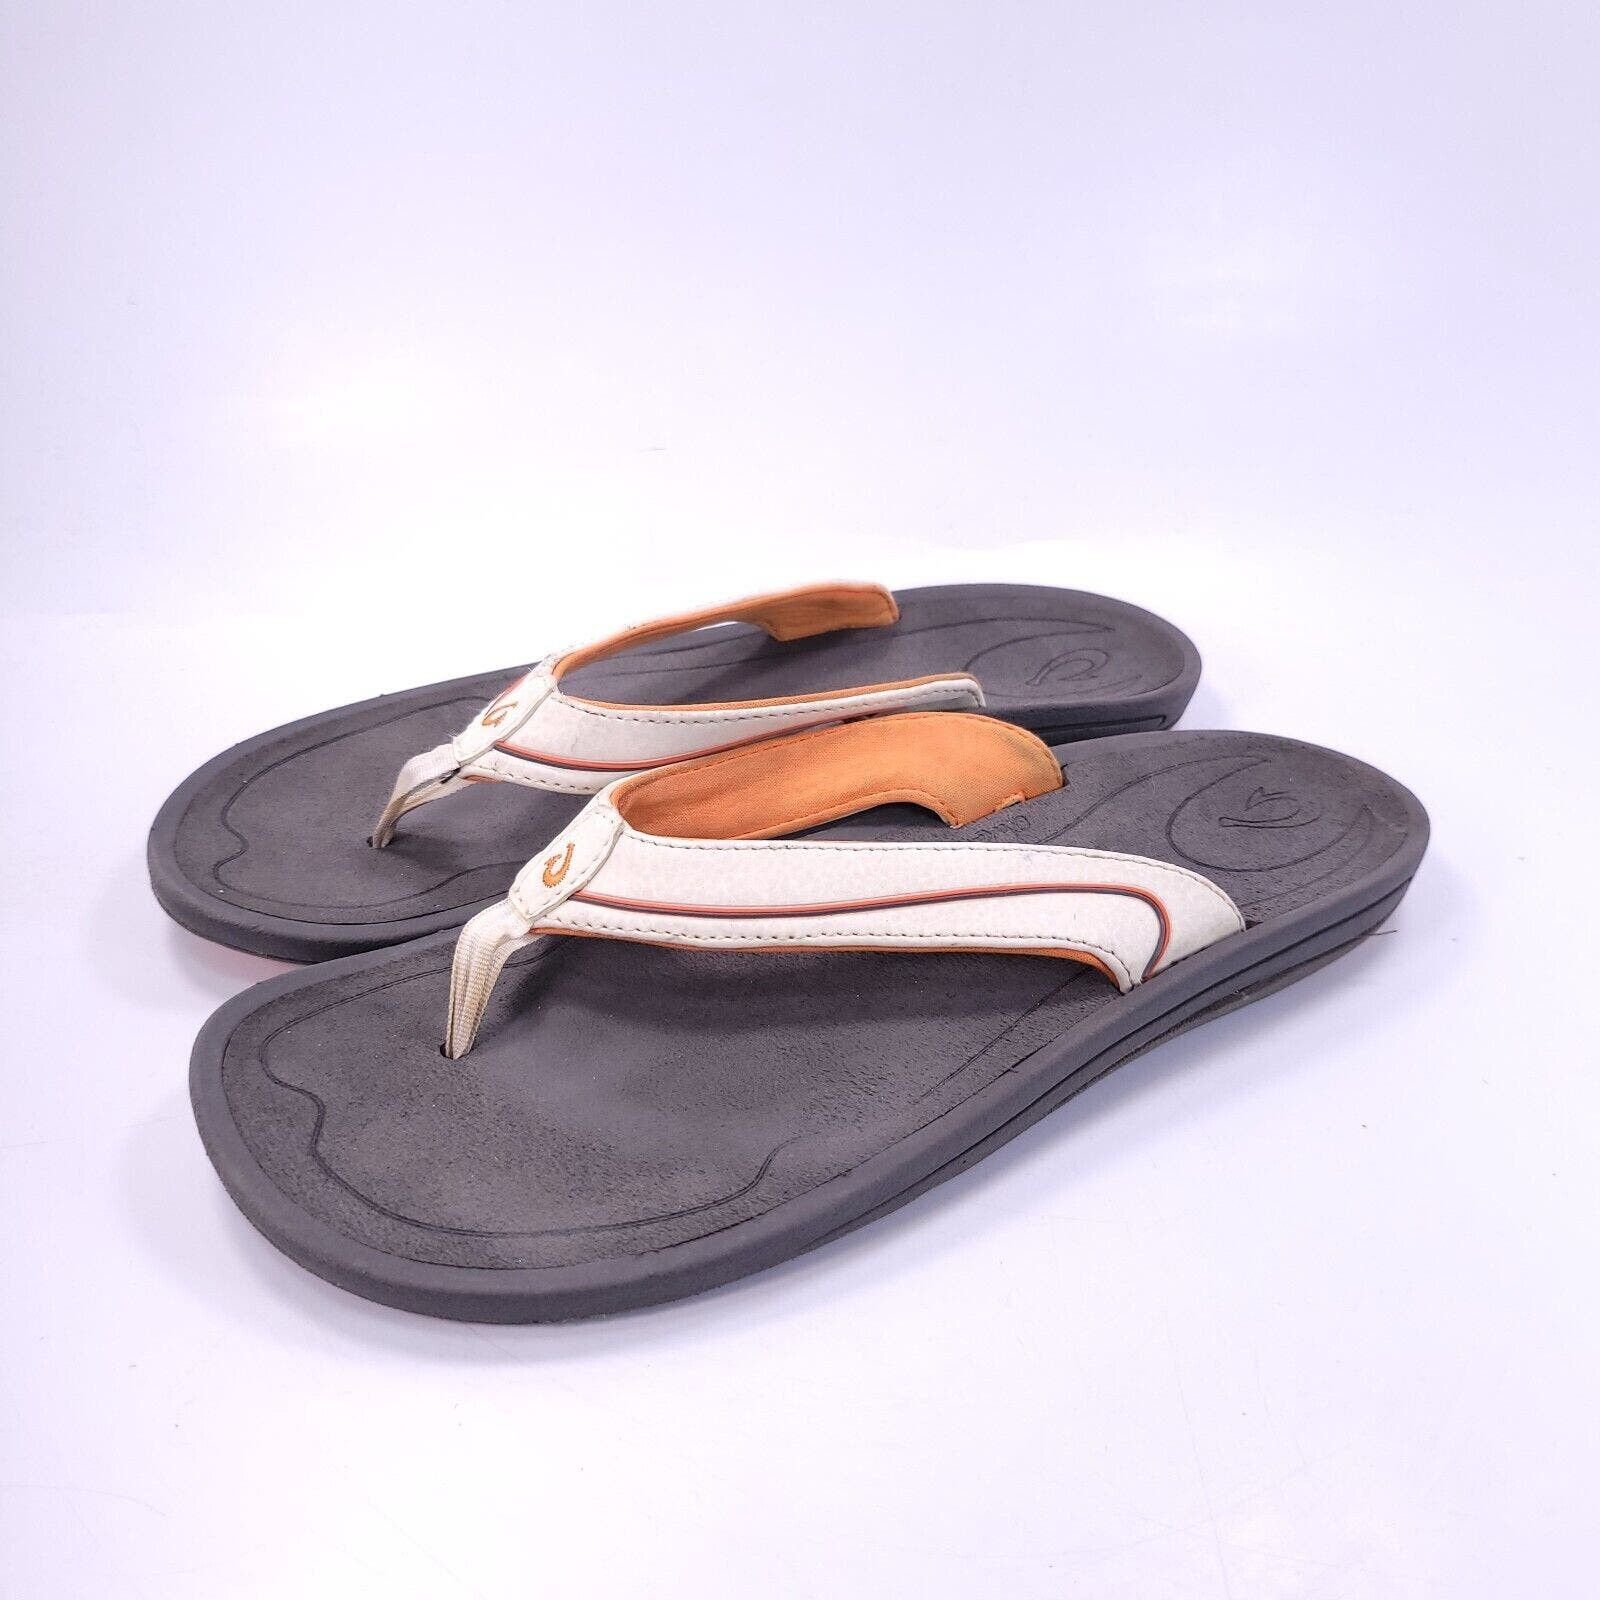 Olukai Paniolo 20129-8787 Slip-On Sandals Women 9 Brown Rustic